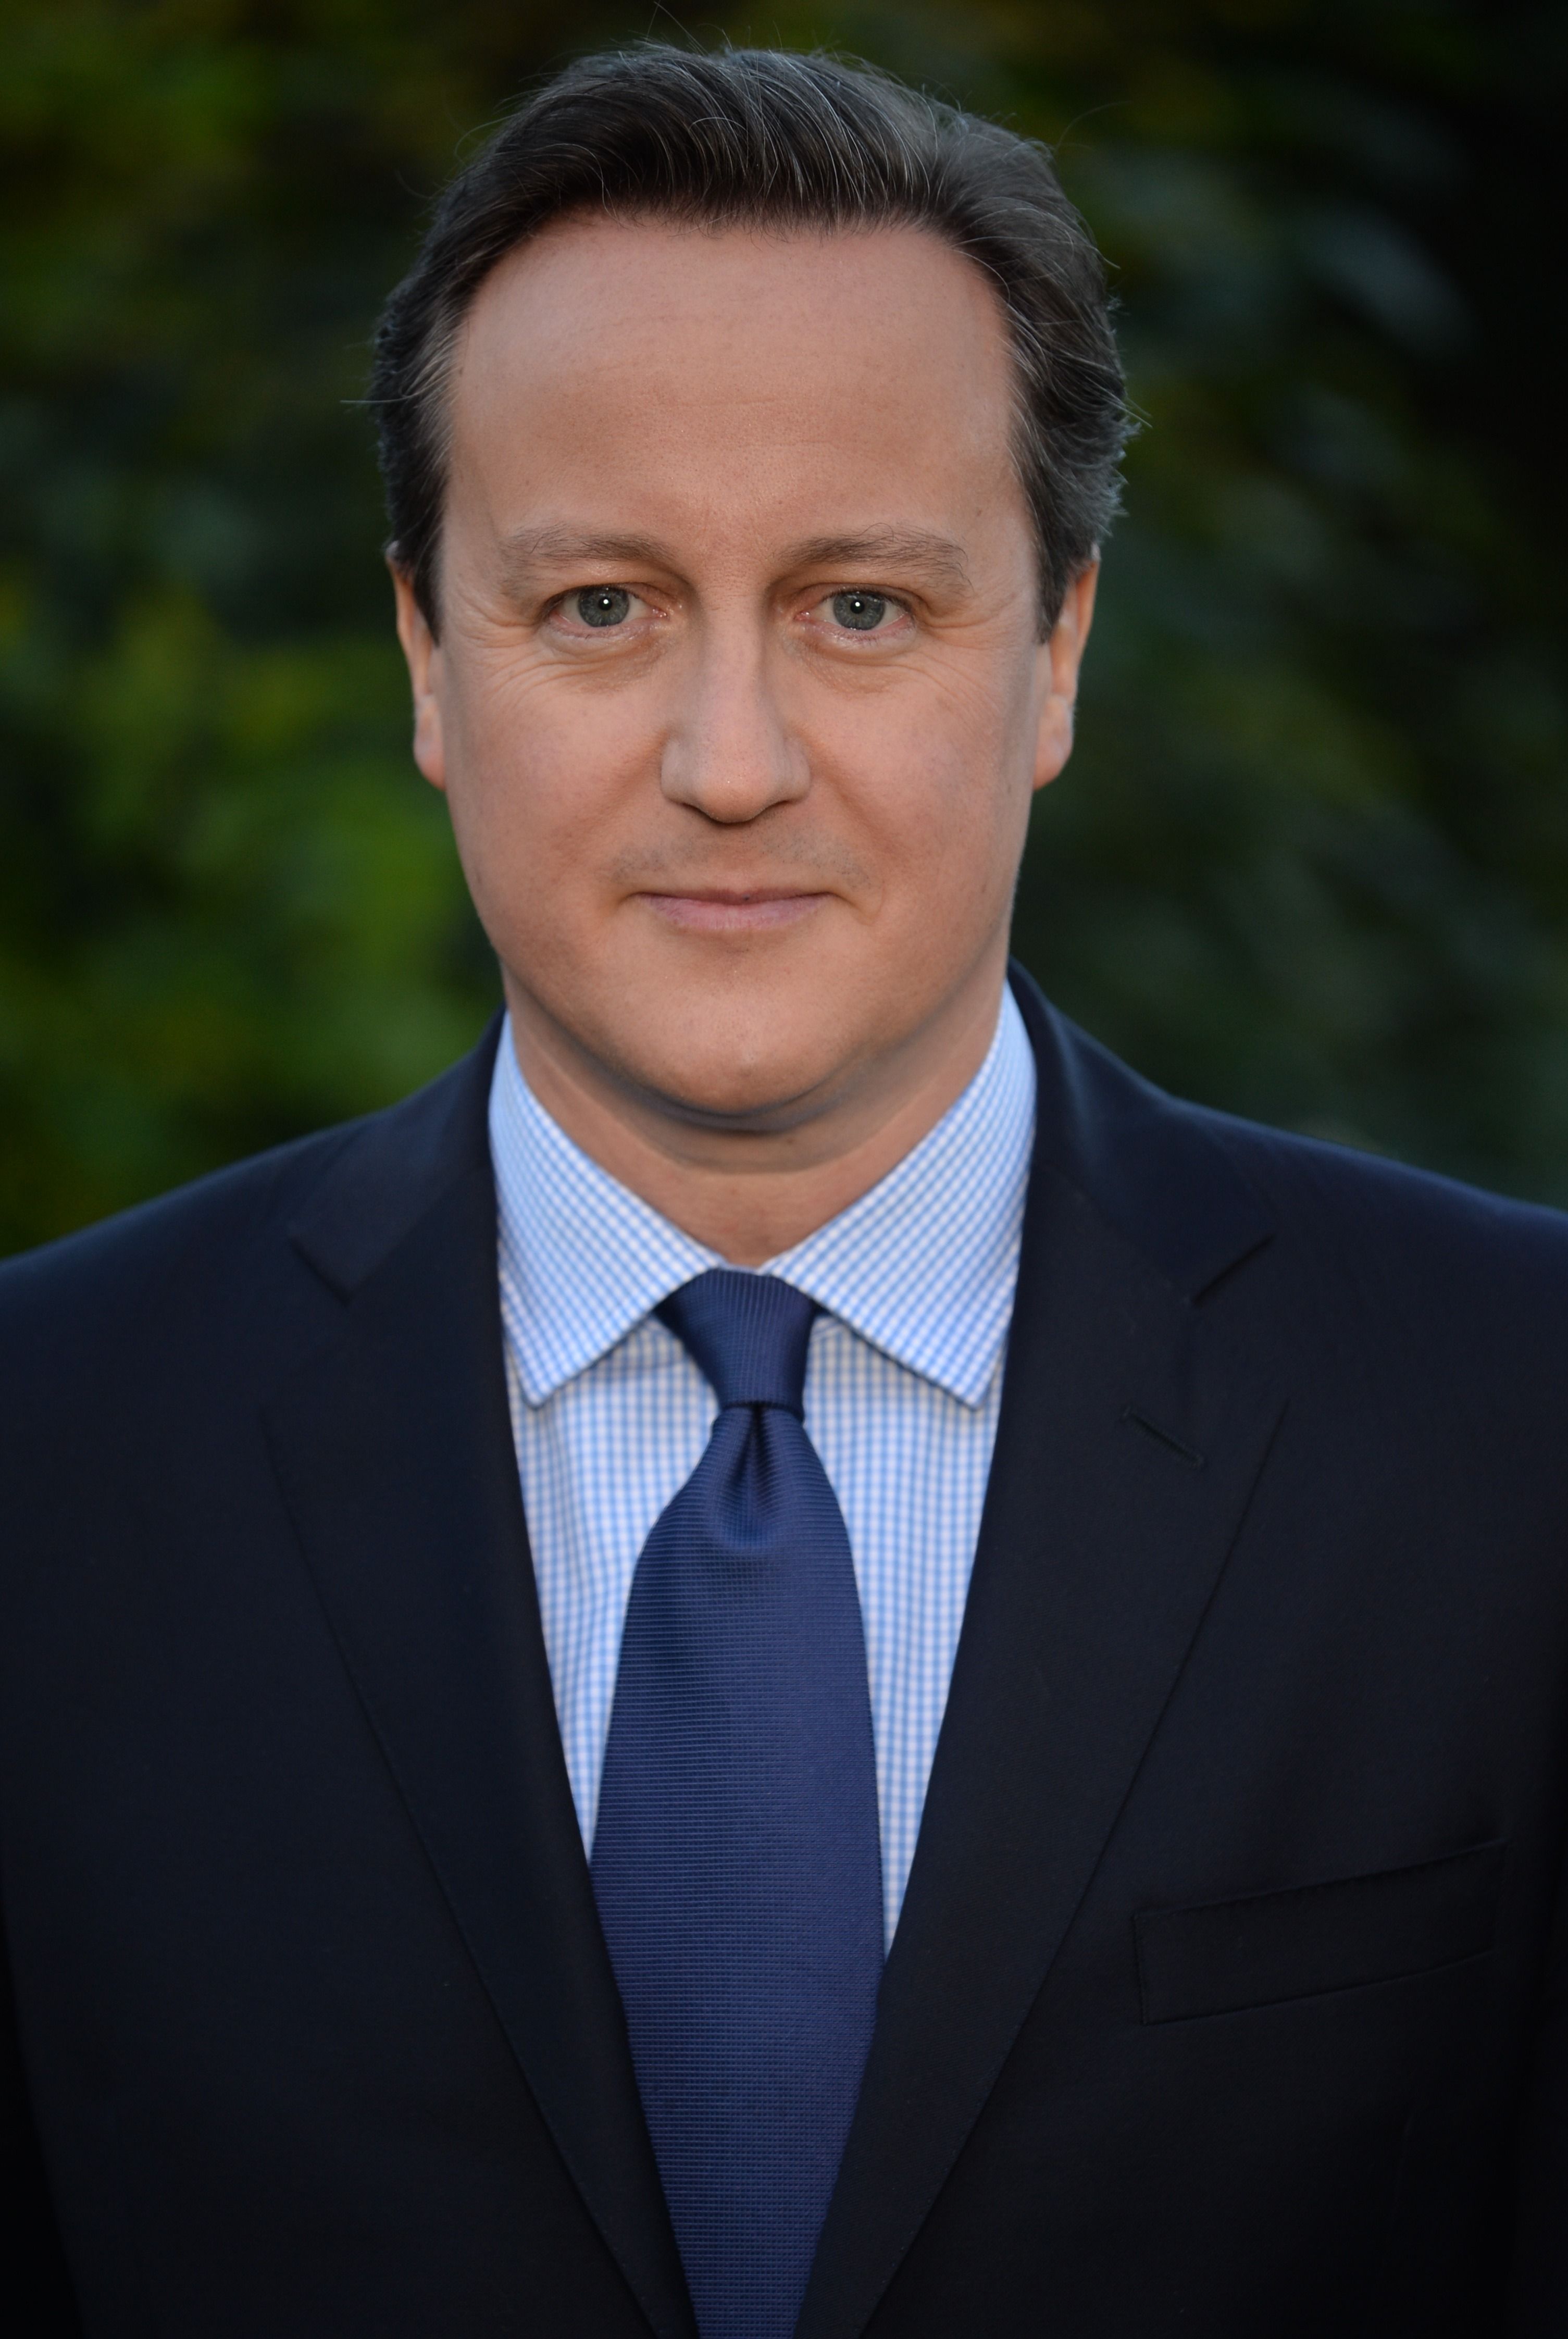 Кэмерон премьер министр. Дэвид Кэмерон. Кто такой Дэвид. Д Кэмерон премьер-министр Великобритании. Дэвид Кэмерон 2010.